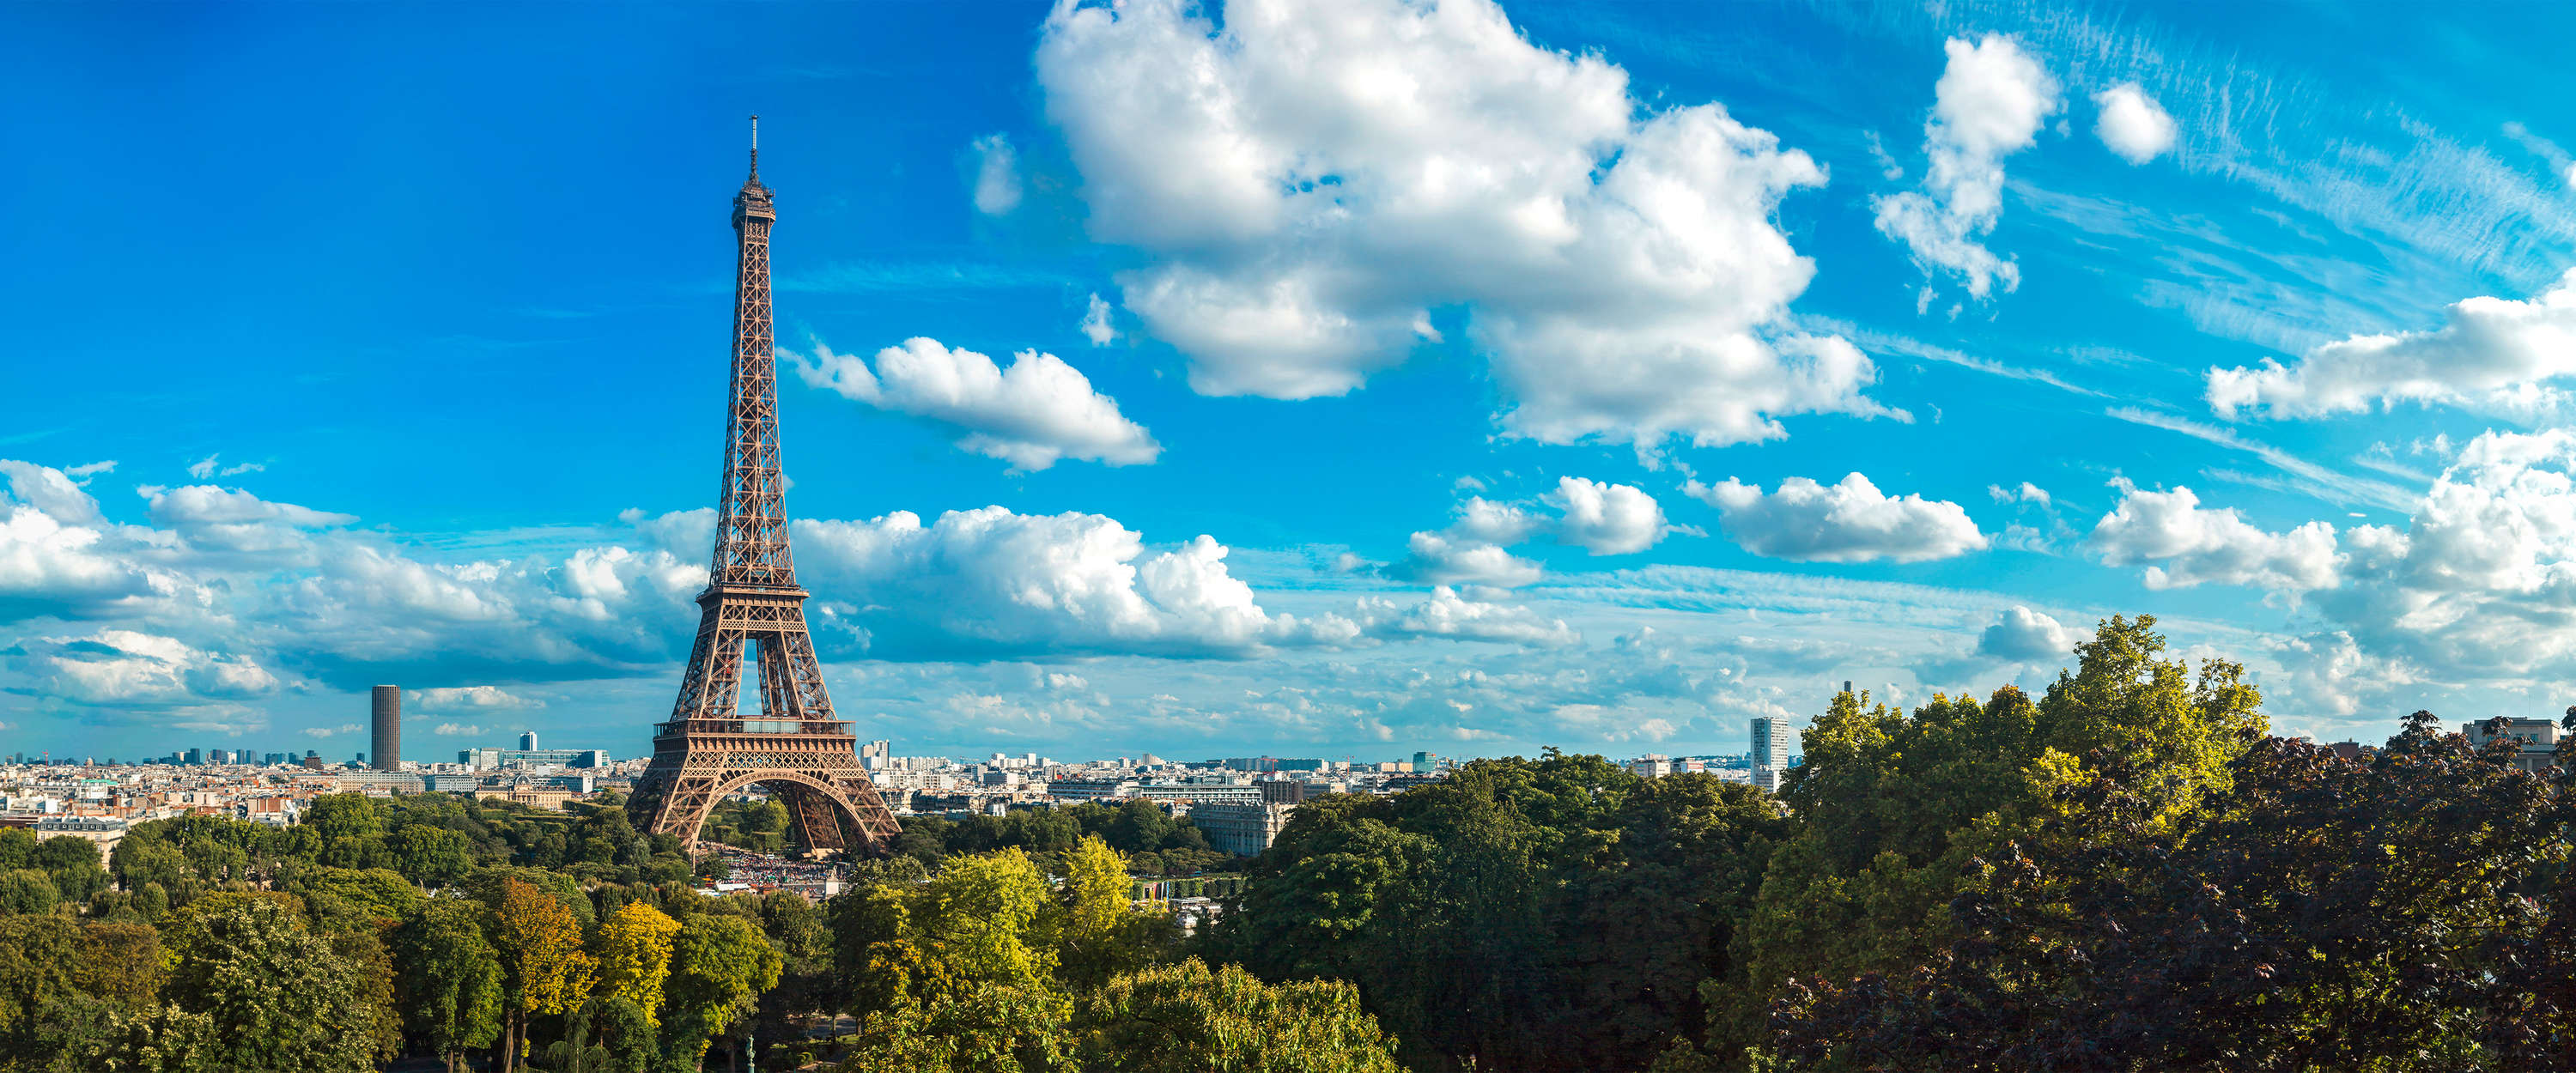             Fototapete Eiffelturm & Skyline von Paris
        